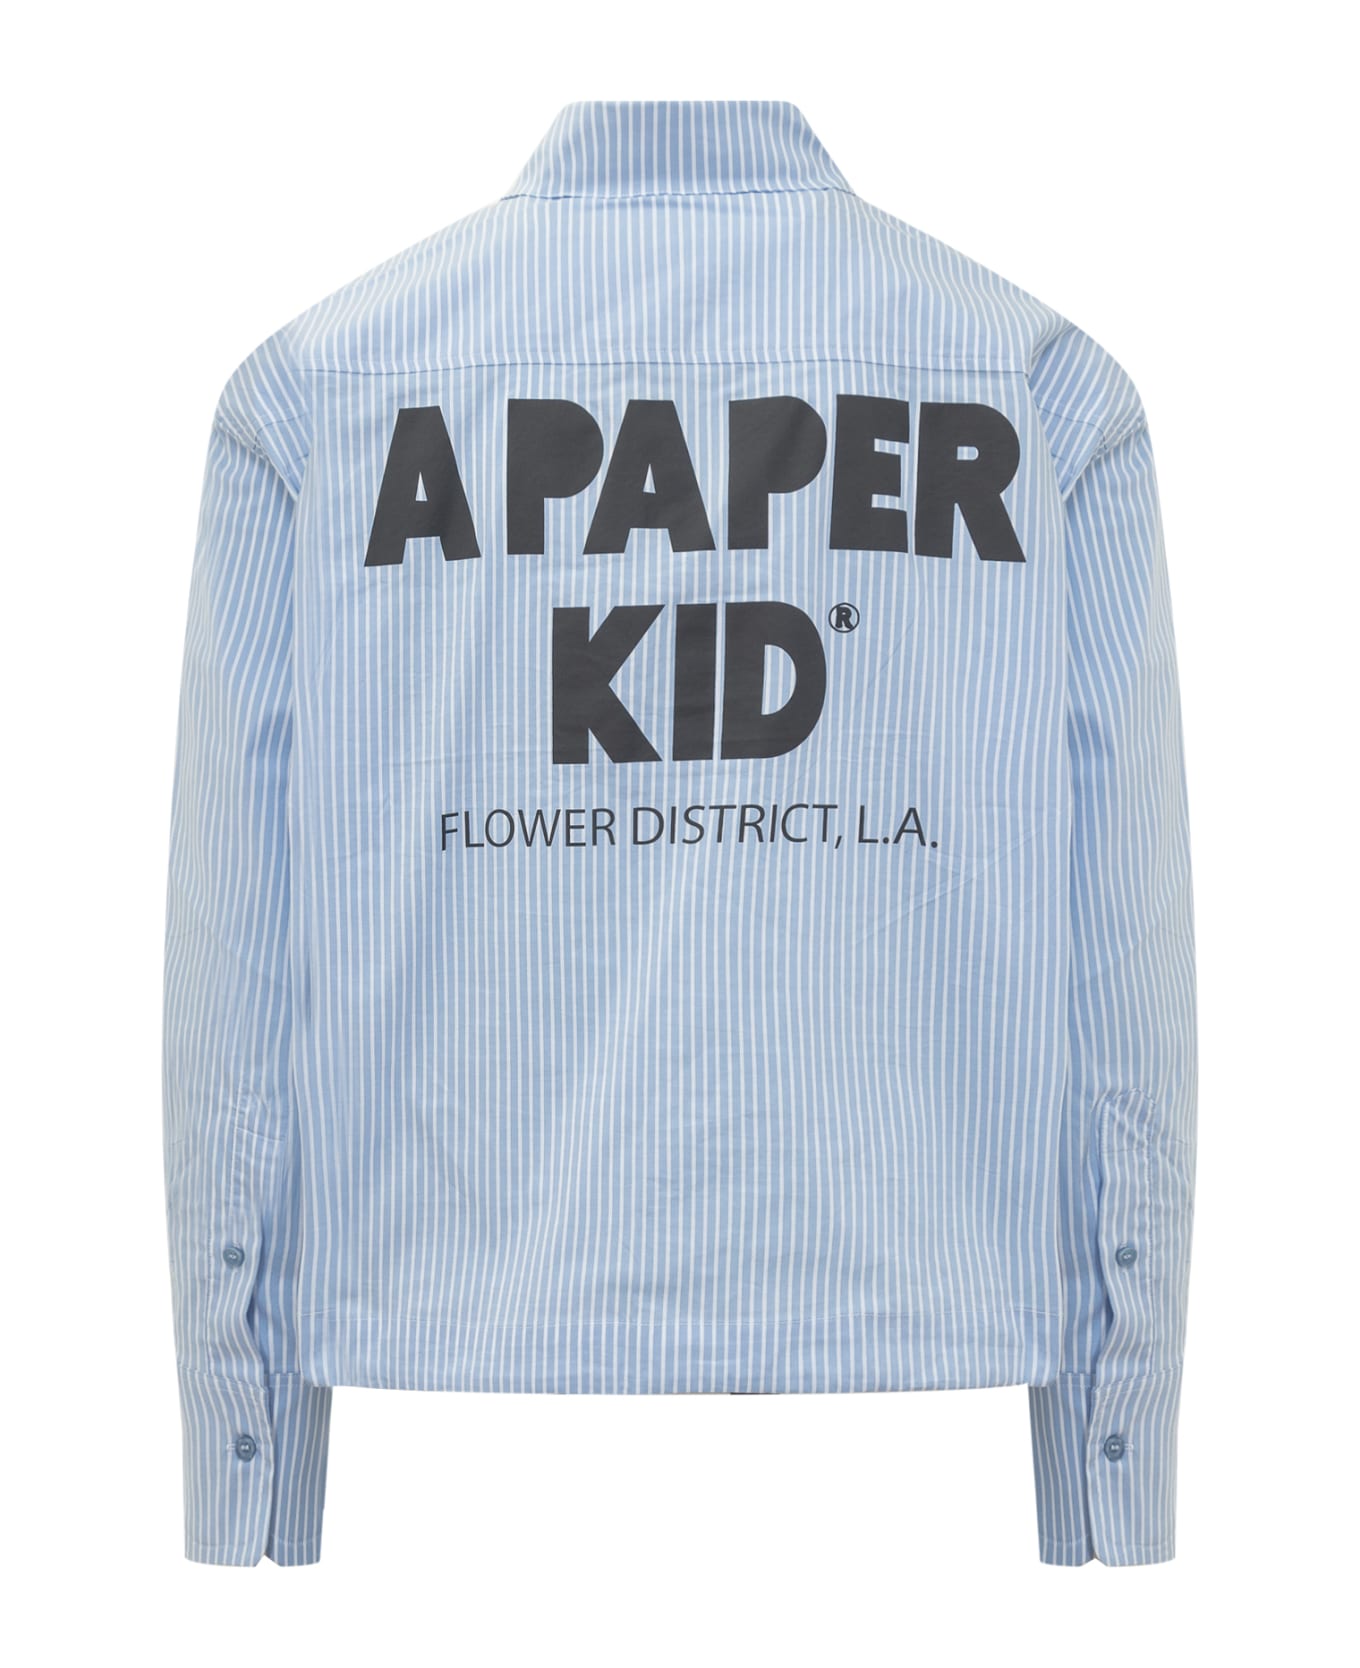 A Paper Kid Shirt - CELESTE/LIGHT BLUE